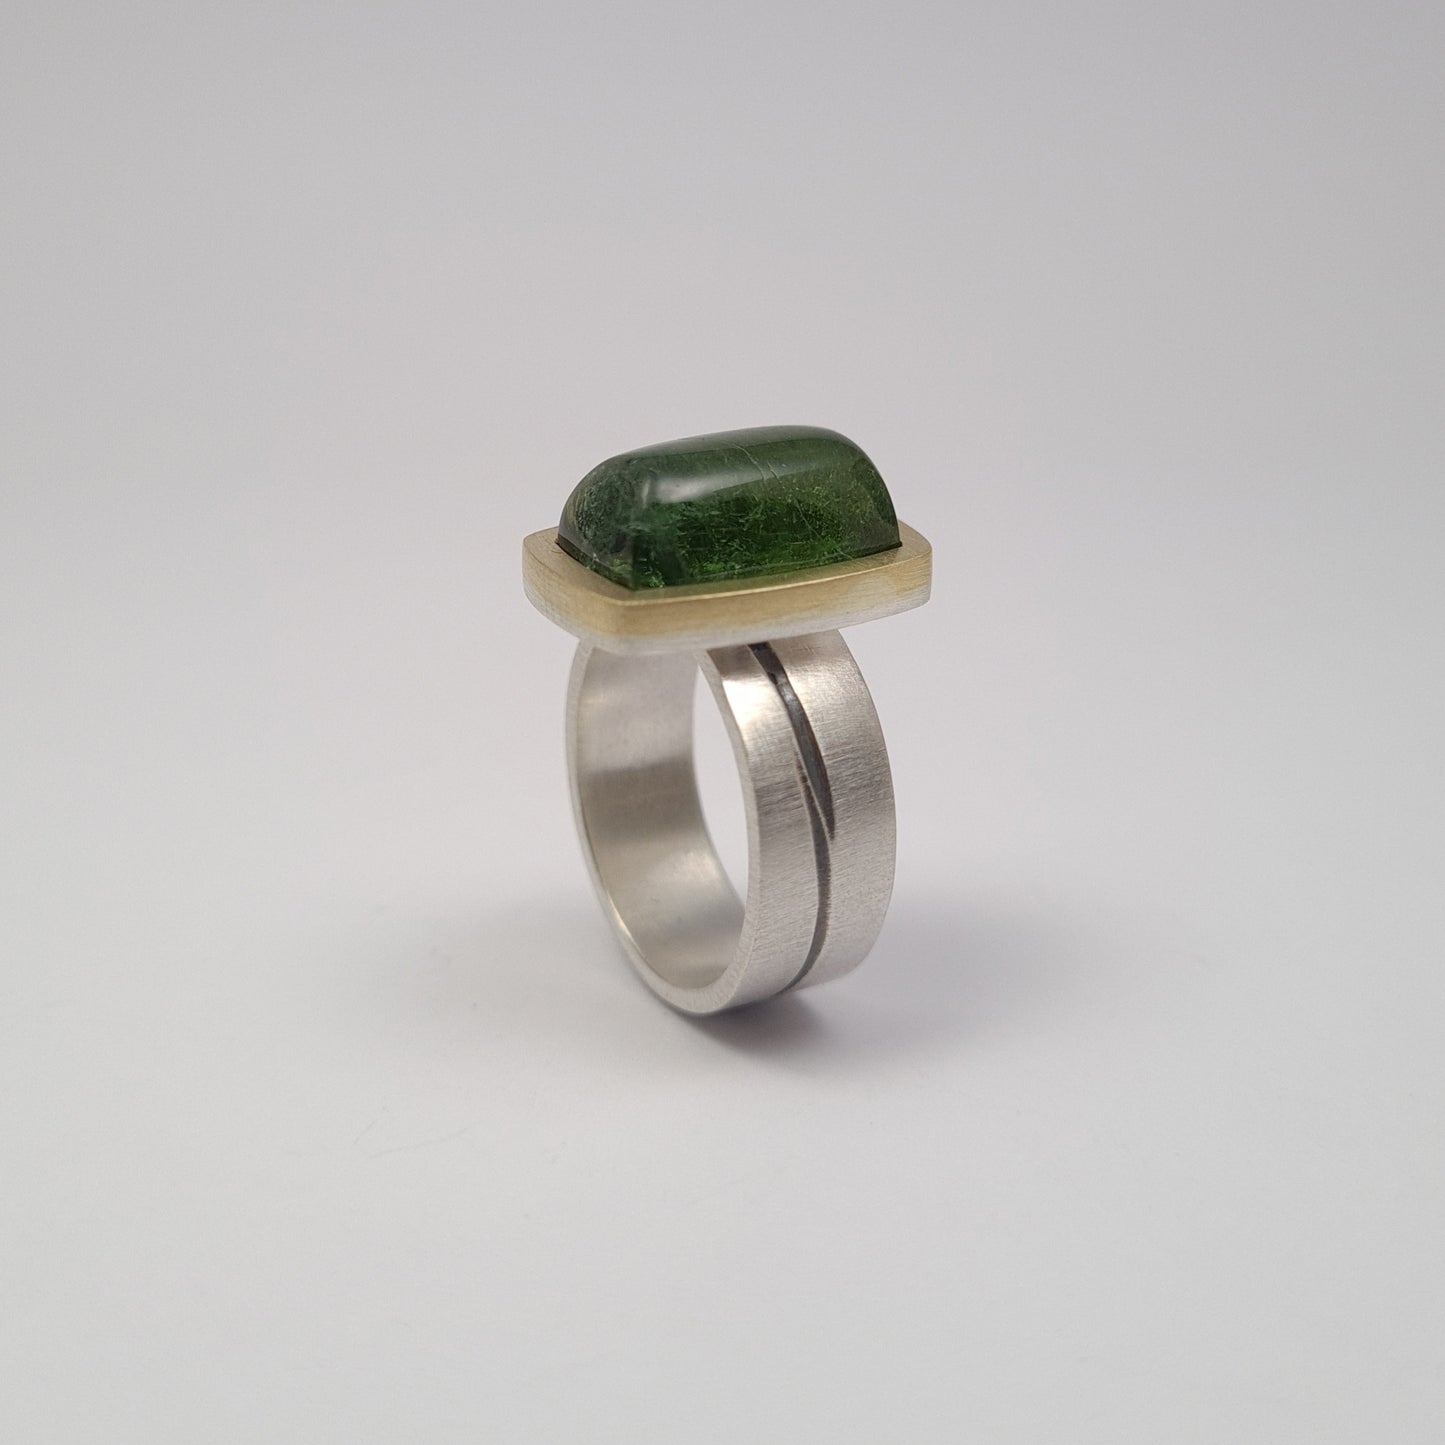 Green tourmaline ring